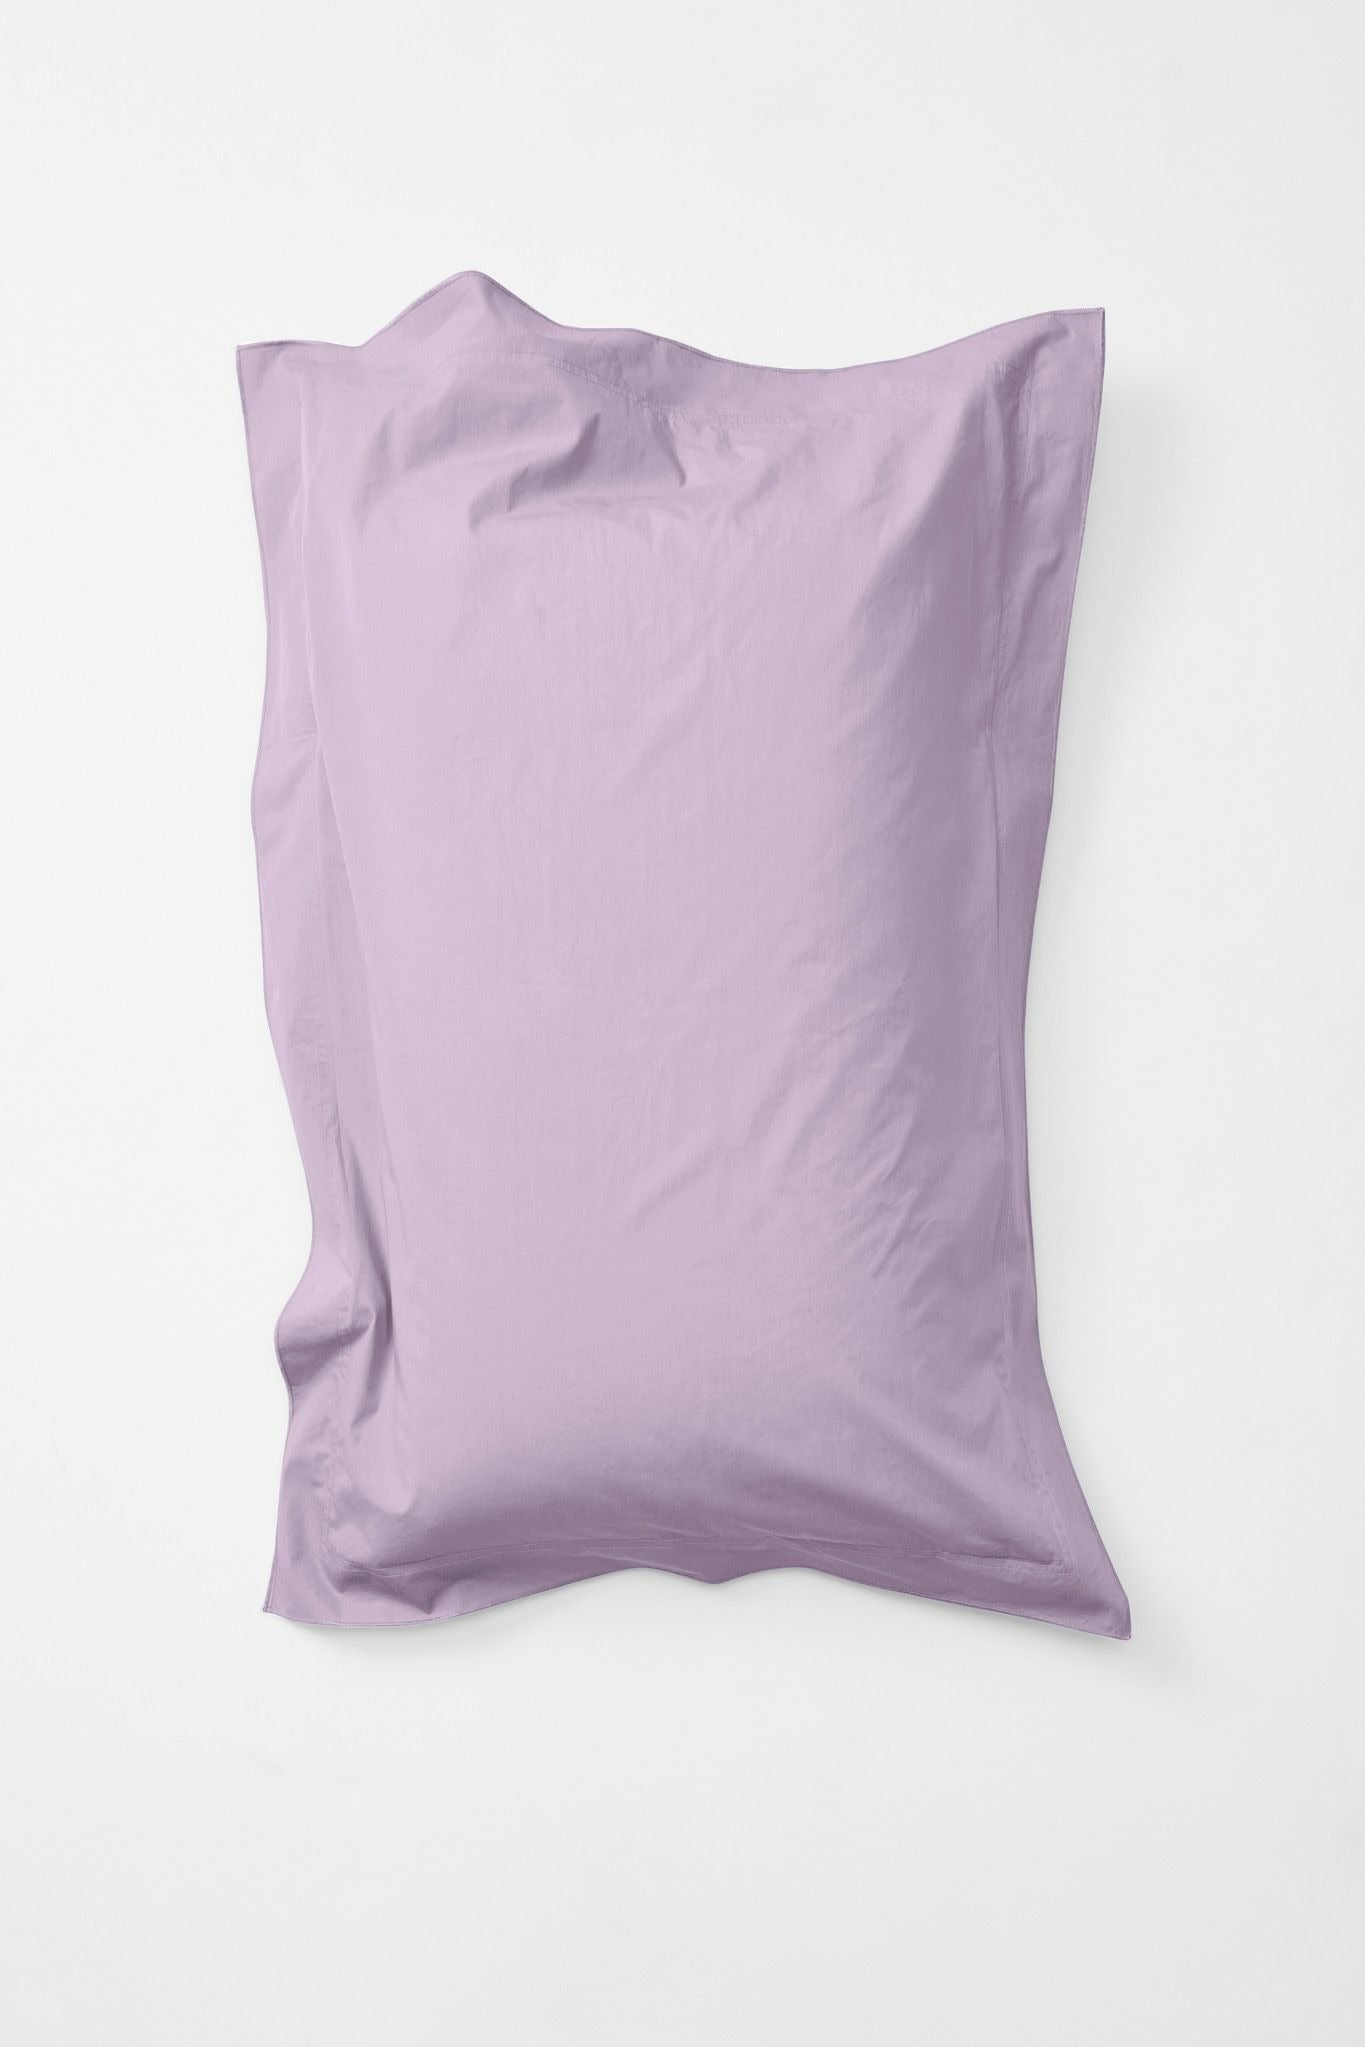 Mono Organic Cotton Percale Pillow Pair - Lilac Pillows in Standard Pillow